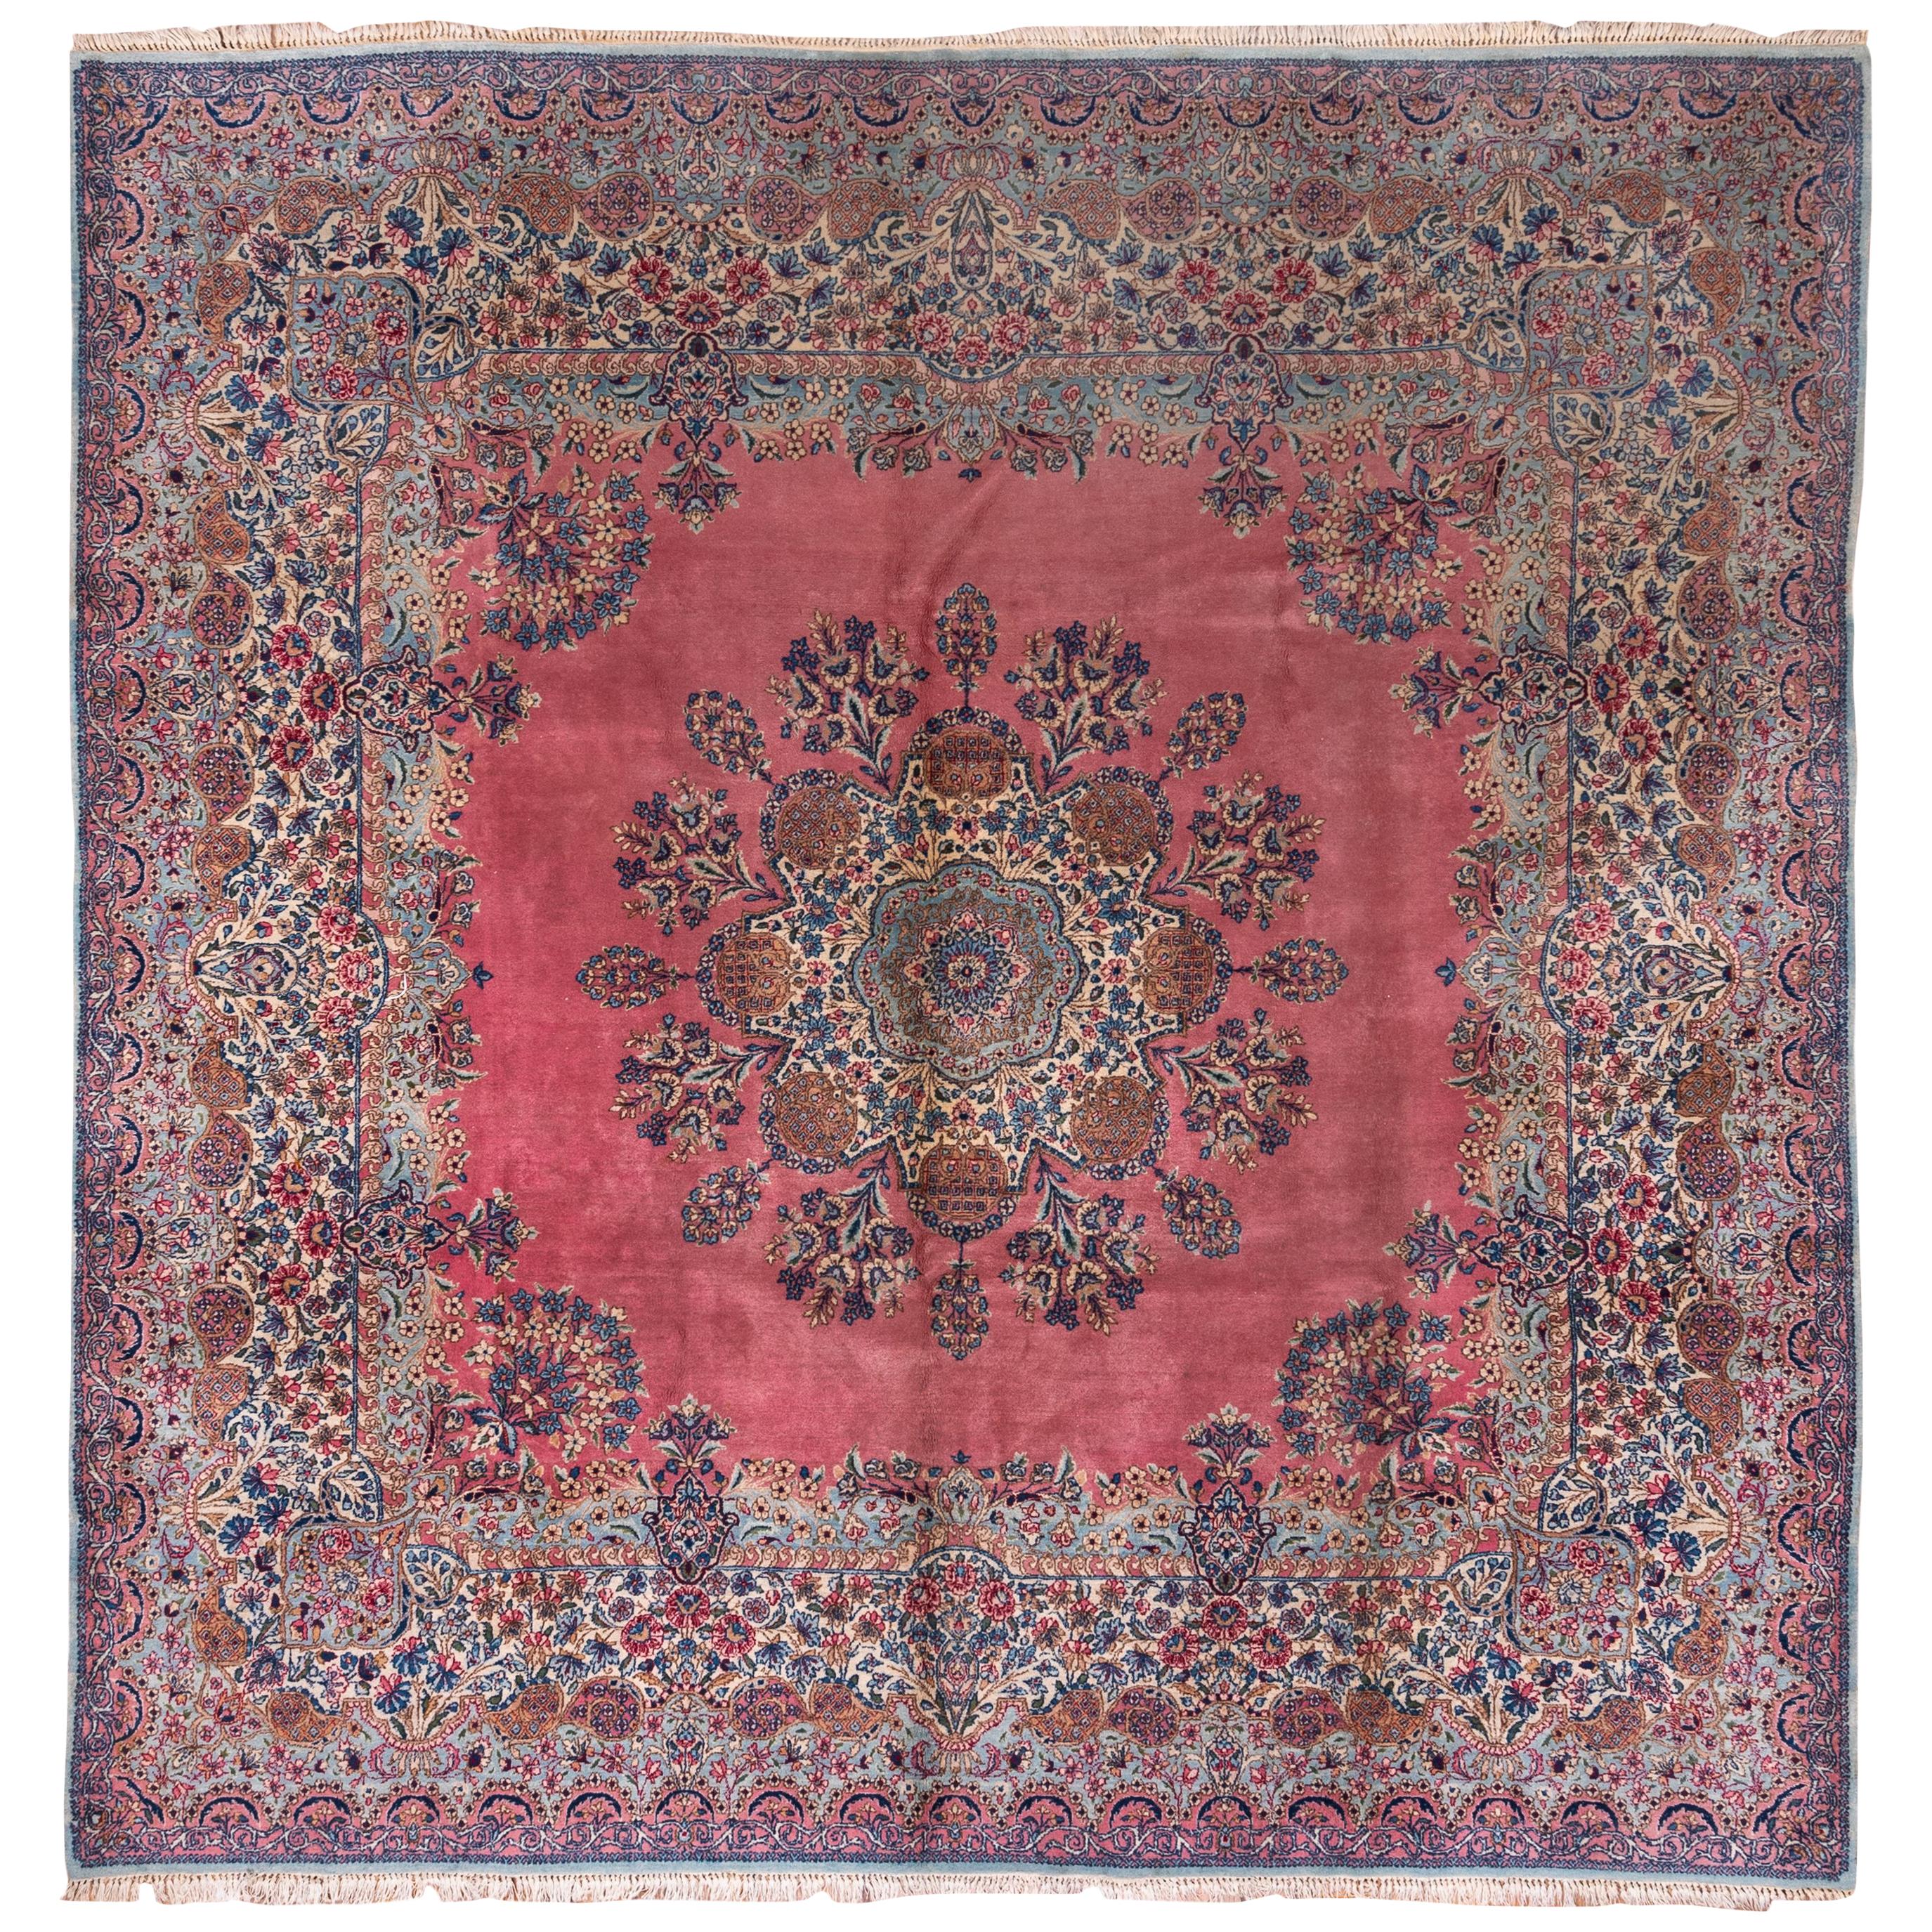 Quadratischer antiker Kerman-Teppich